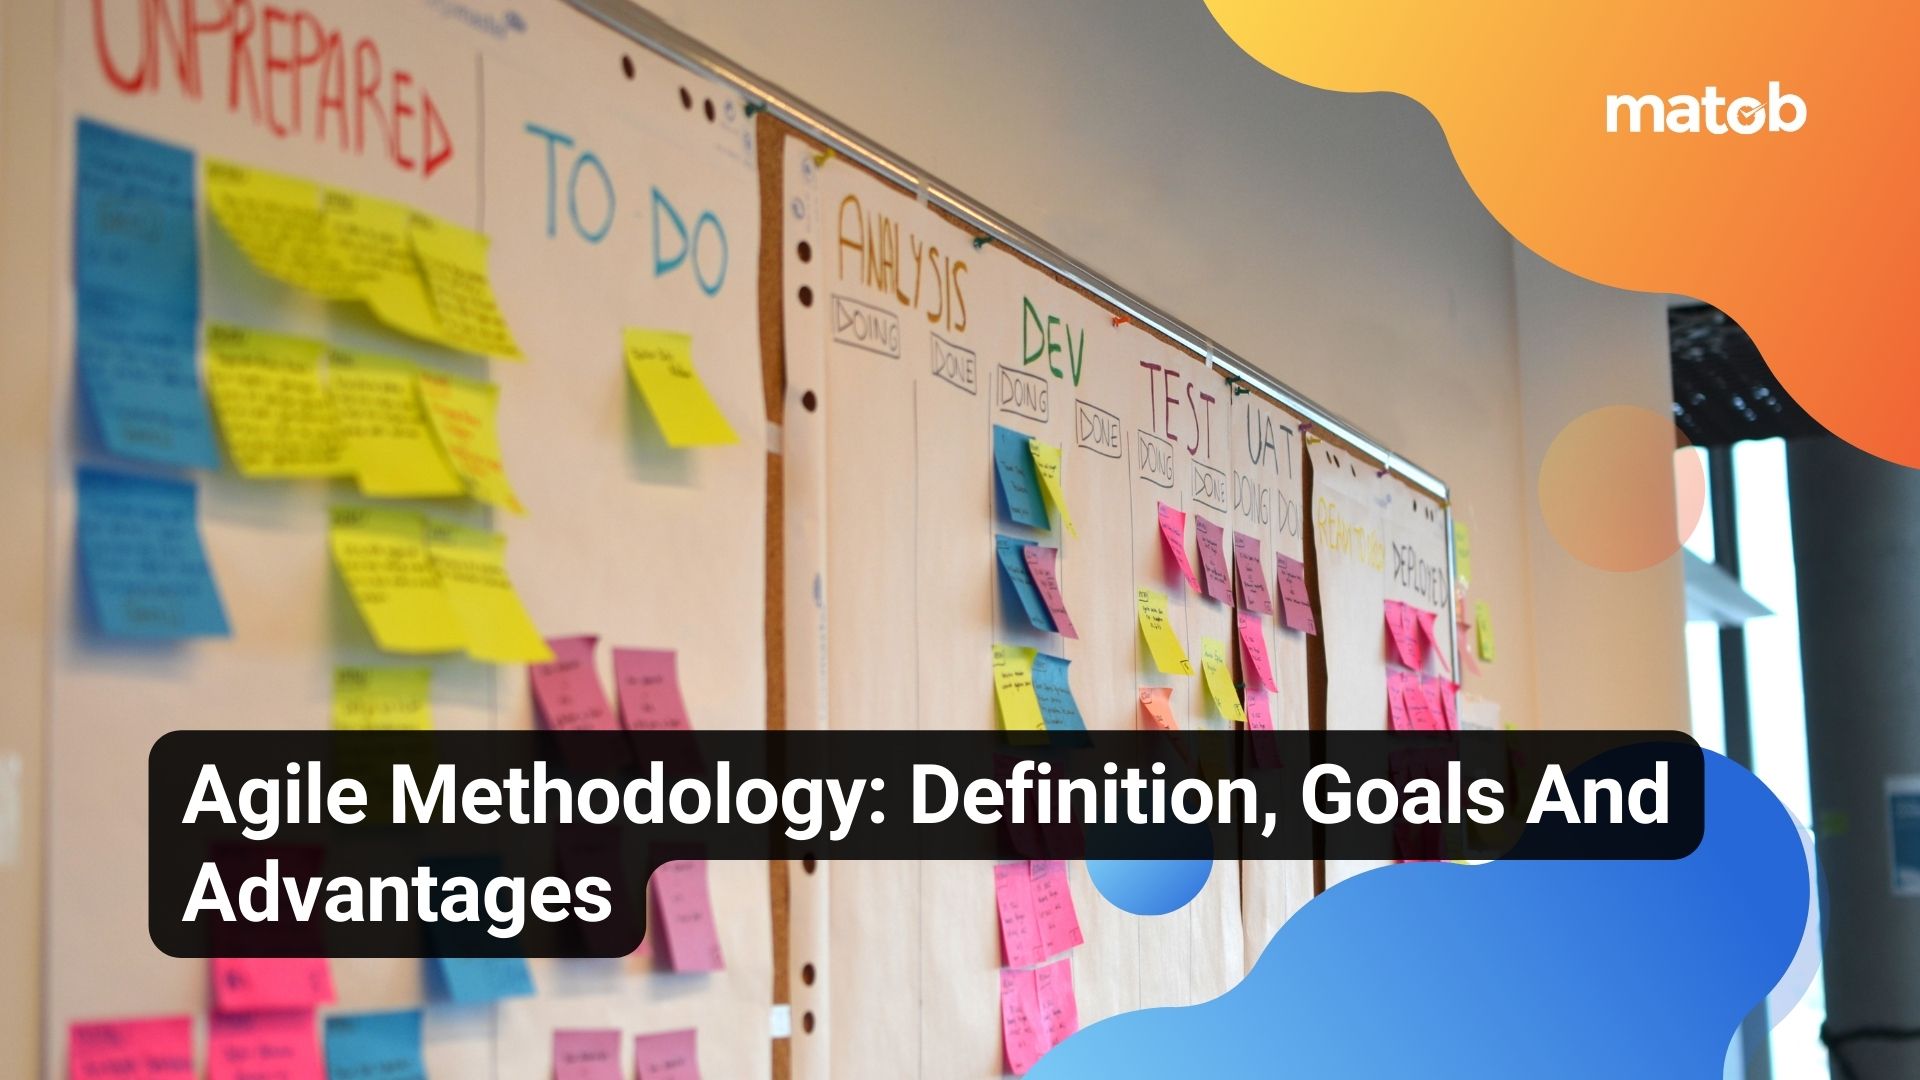 Agile Methodology: Definition, Goals And Advantages